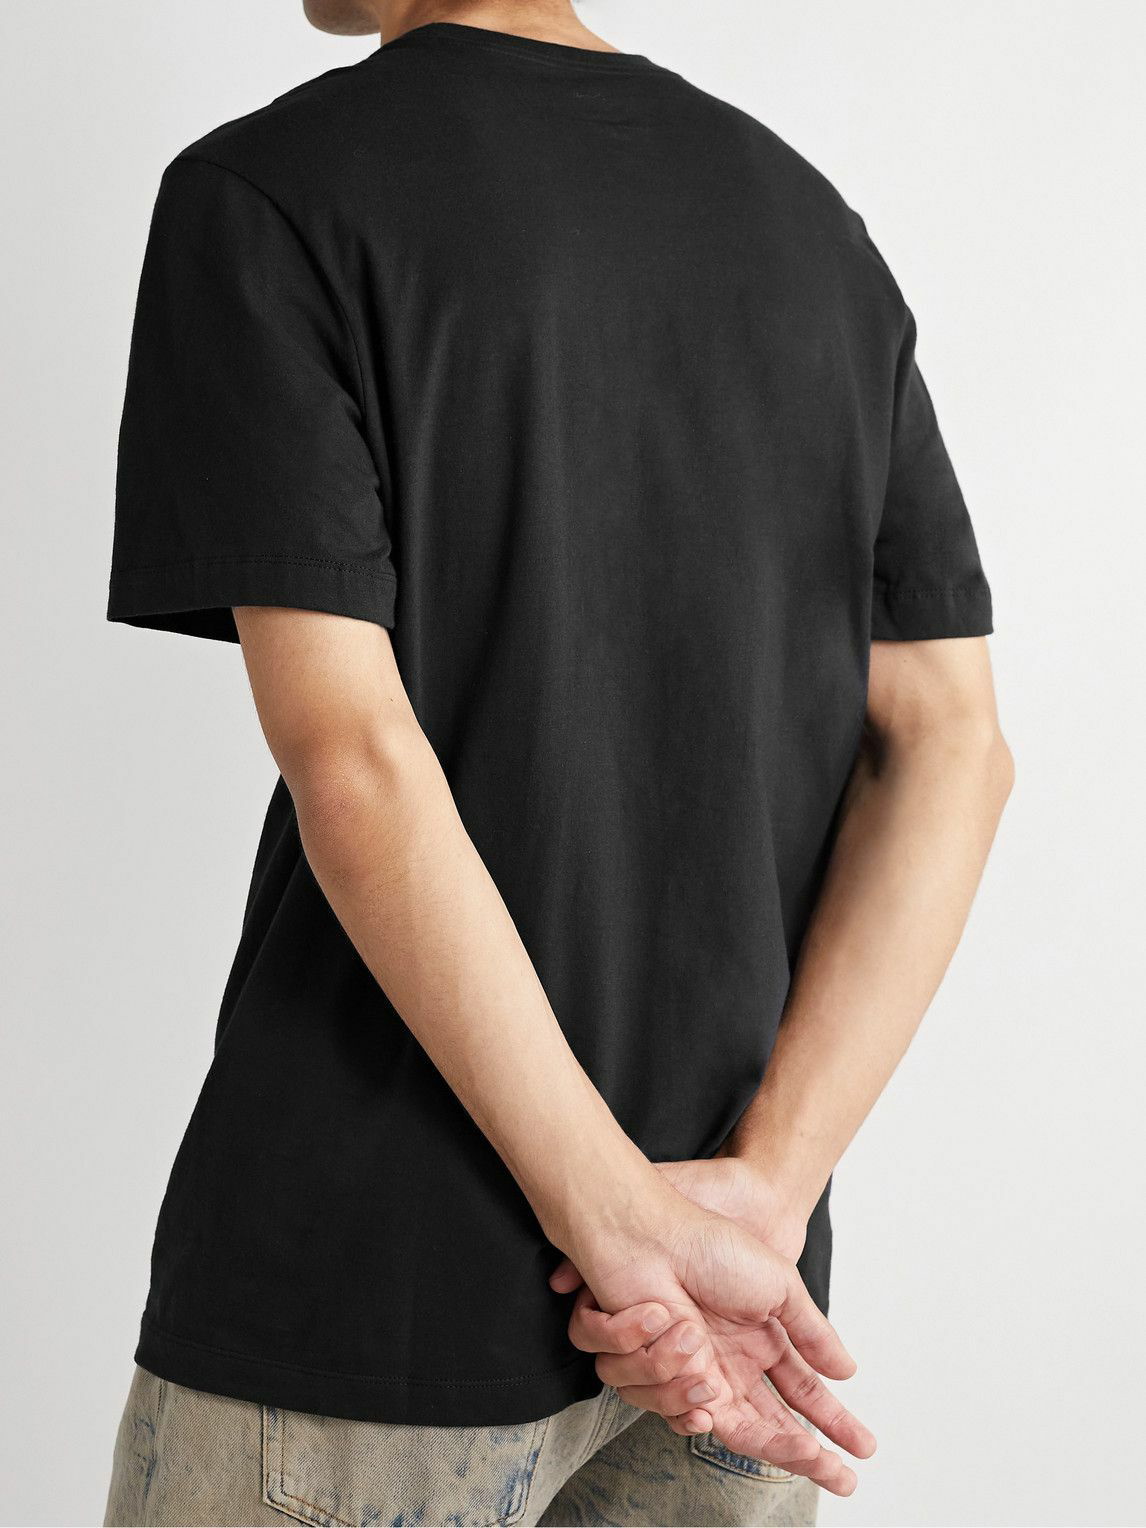 Nike - Air Logo-Print Cotton-Jersey T-Shirt - Black Nike